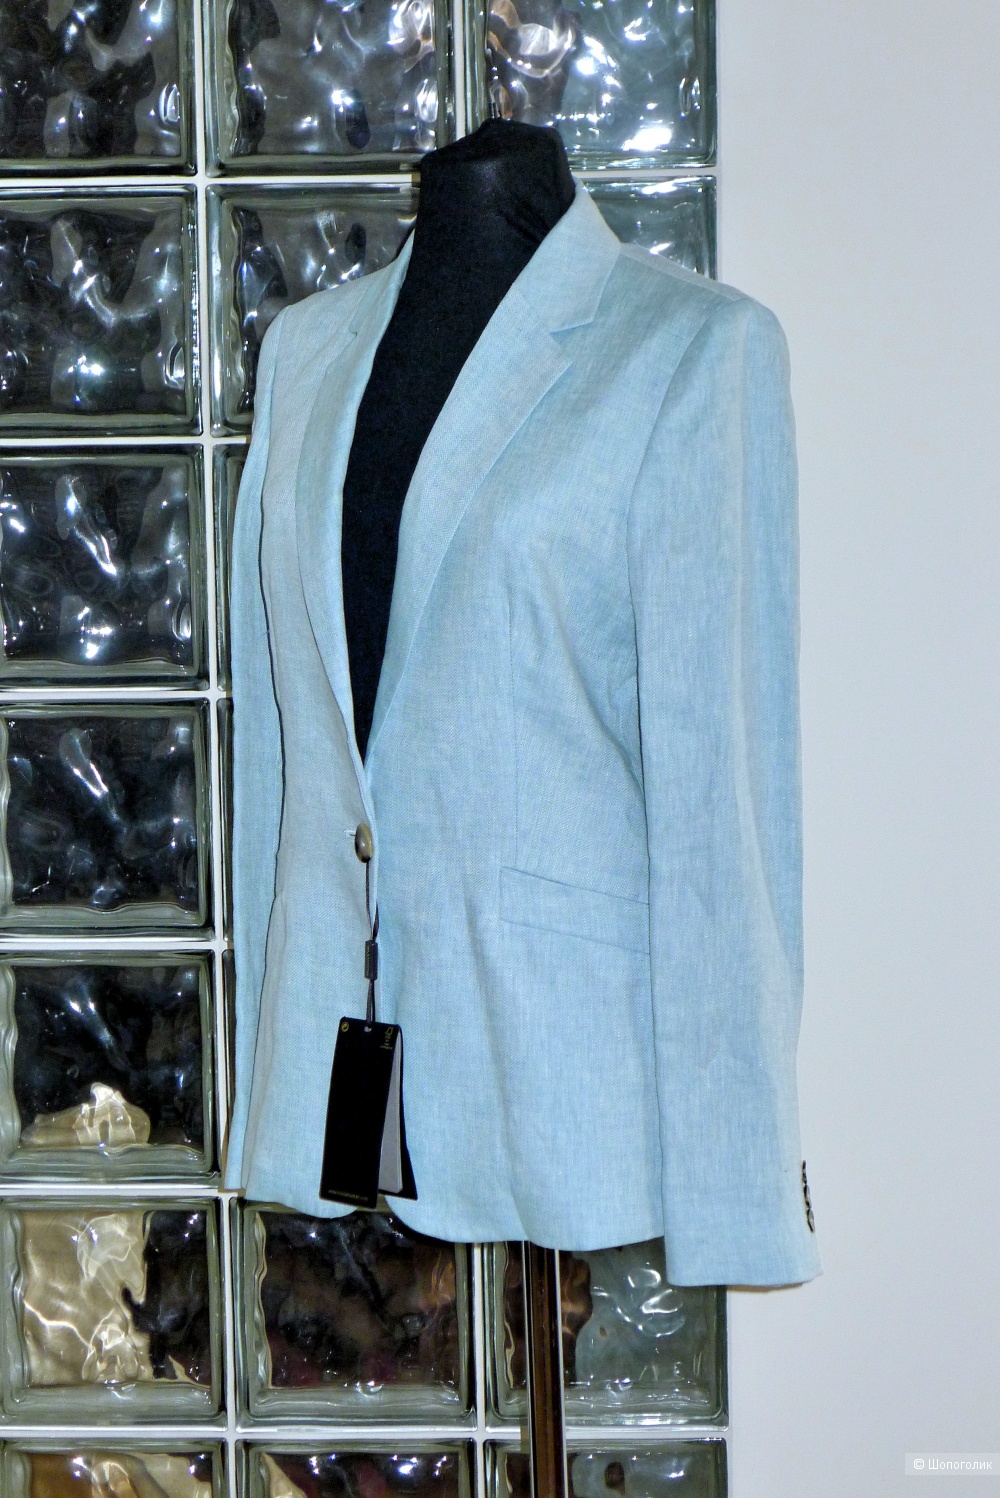 Пиджак Massimo Dutti размер 38